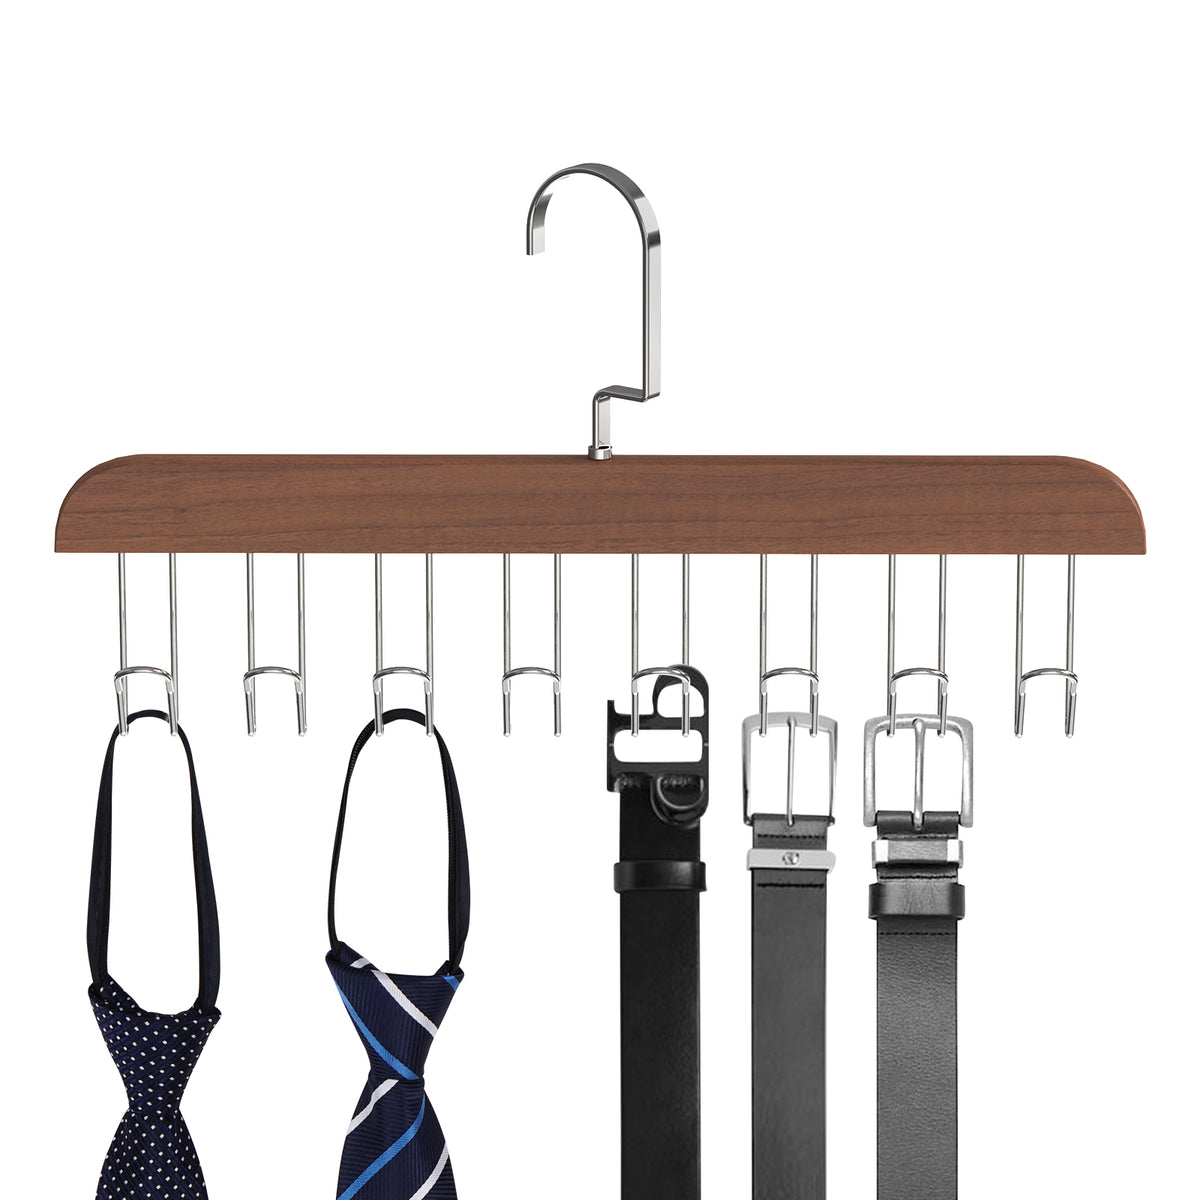 Adorila Wooden Belt Hanger for Closet, Tank Top Bra Hanger with 8 Hooks, Closet Accessories Organizer Hooks for Belts and Ties (Brown)